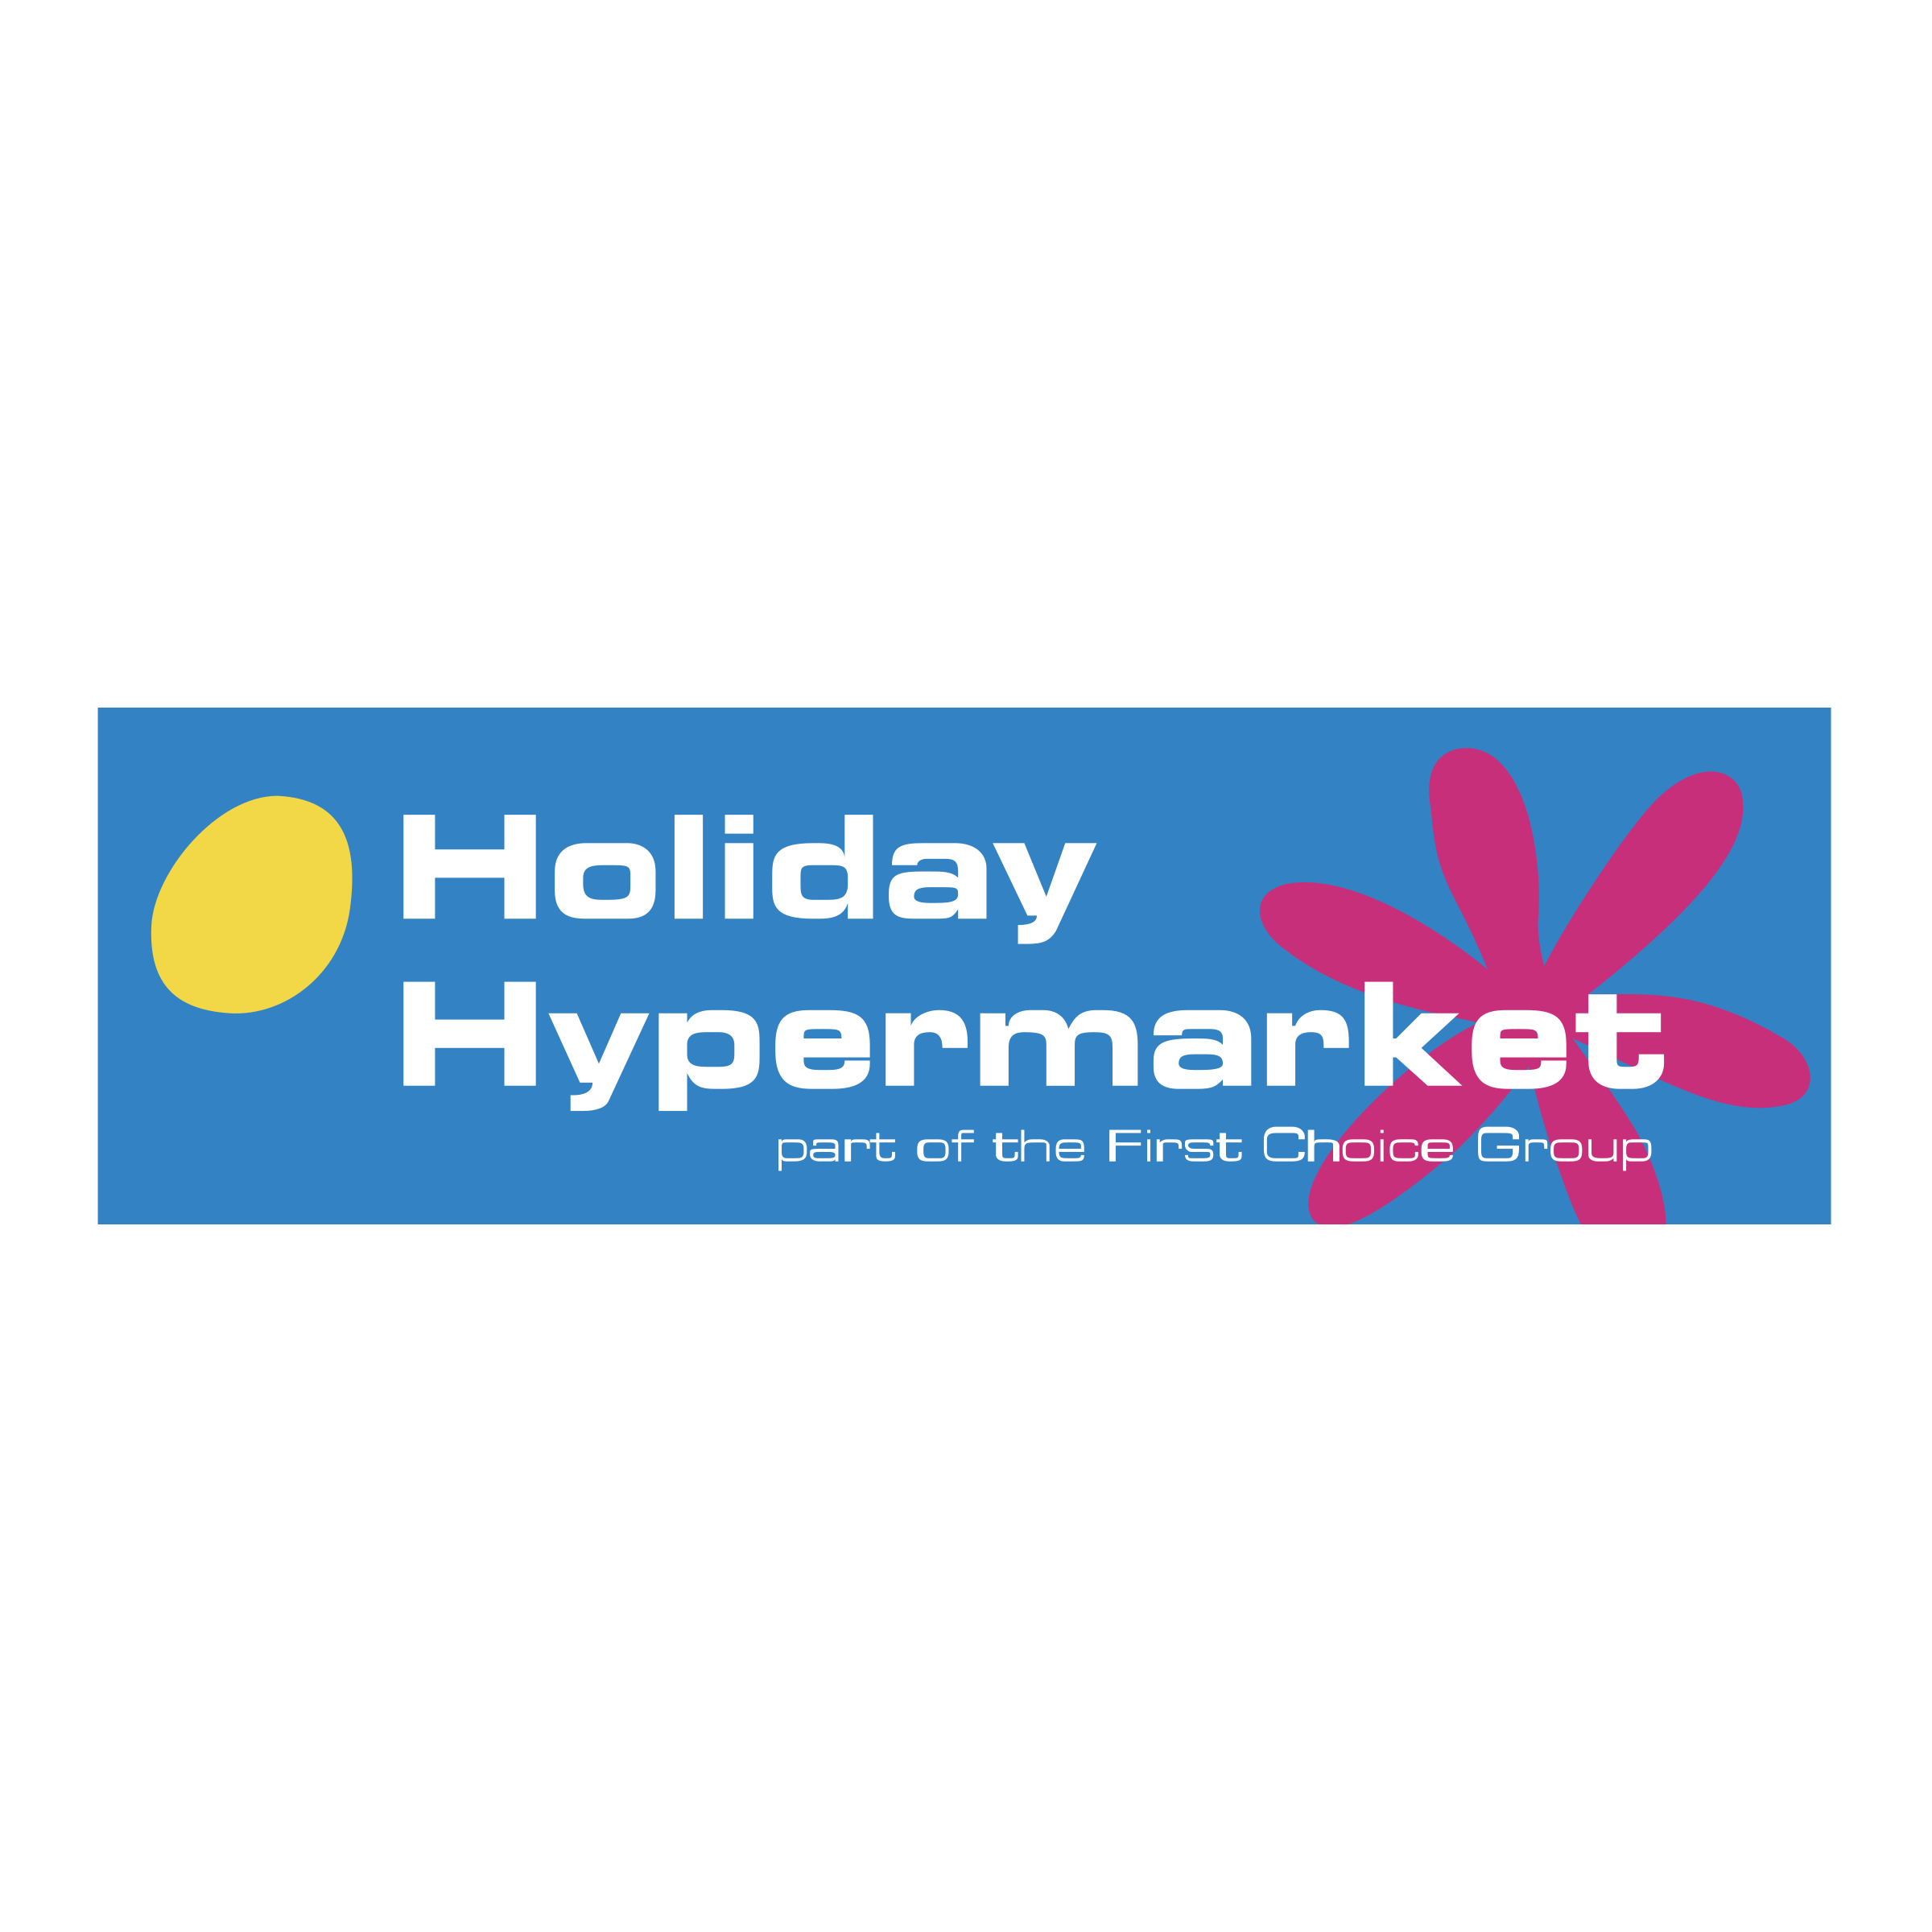 Hypermarket Logo - Holiday Hypermarket Logo PNG Transparent & SVG Vector - Freebie Supply